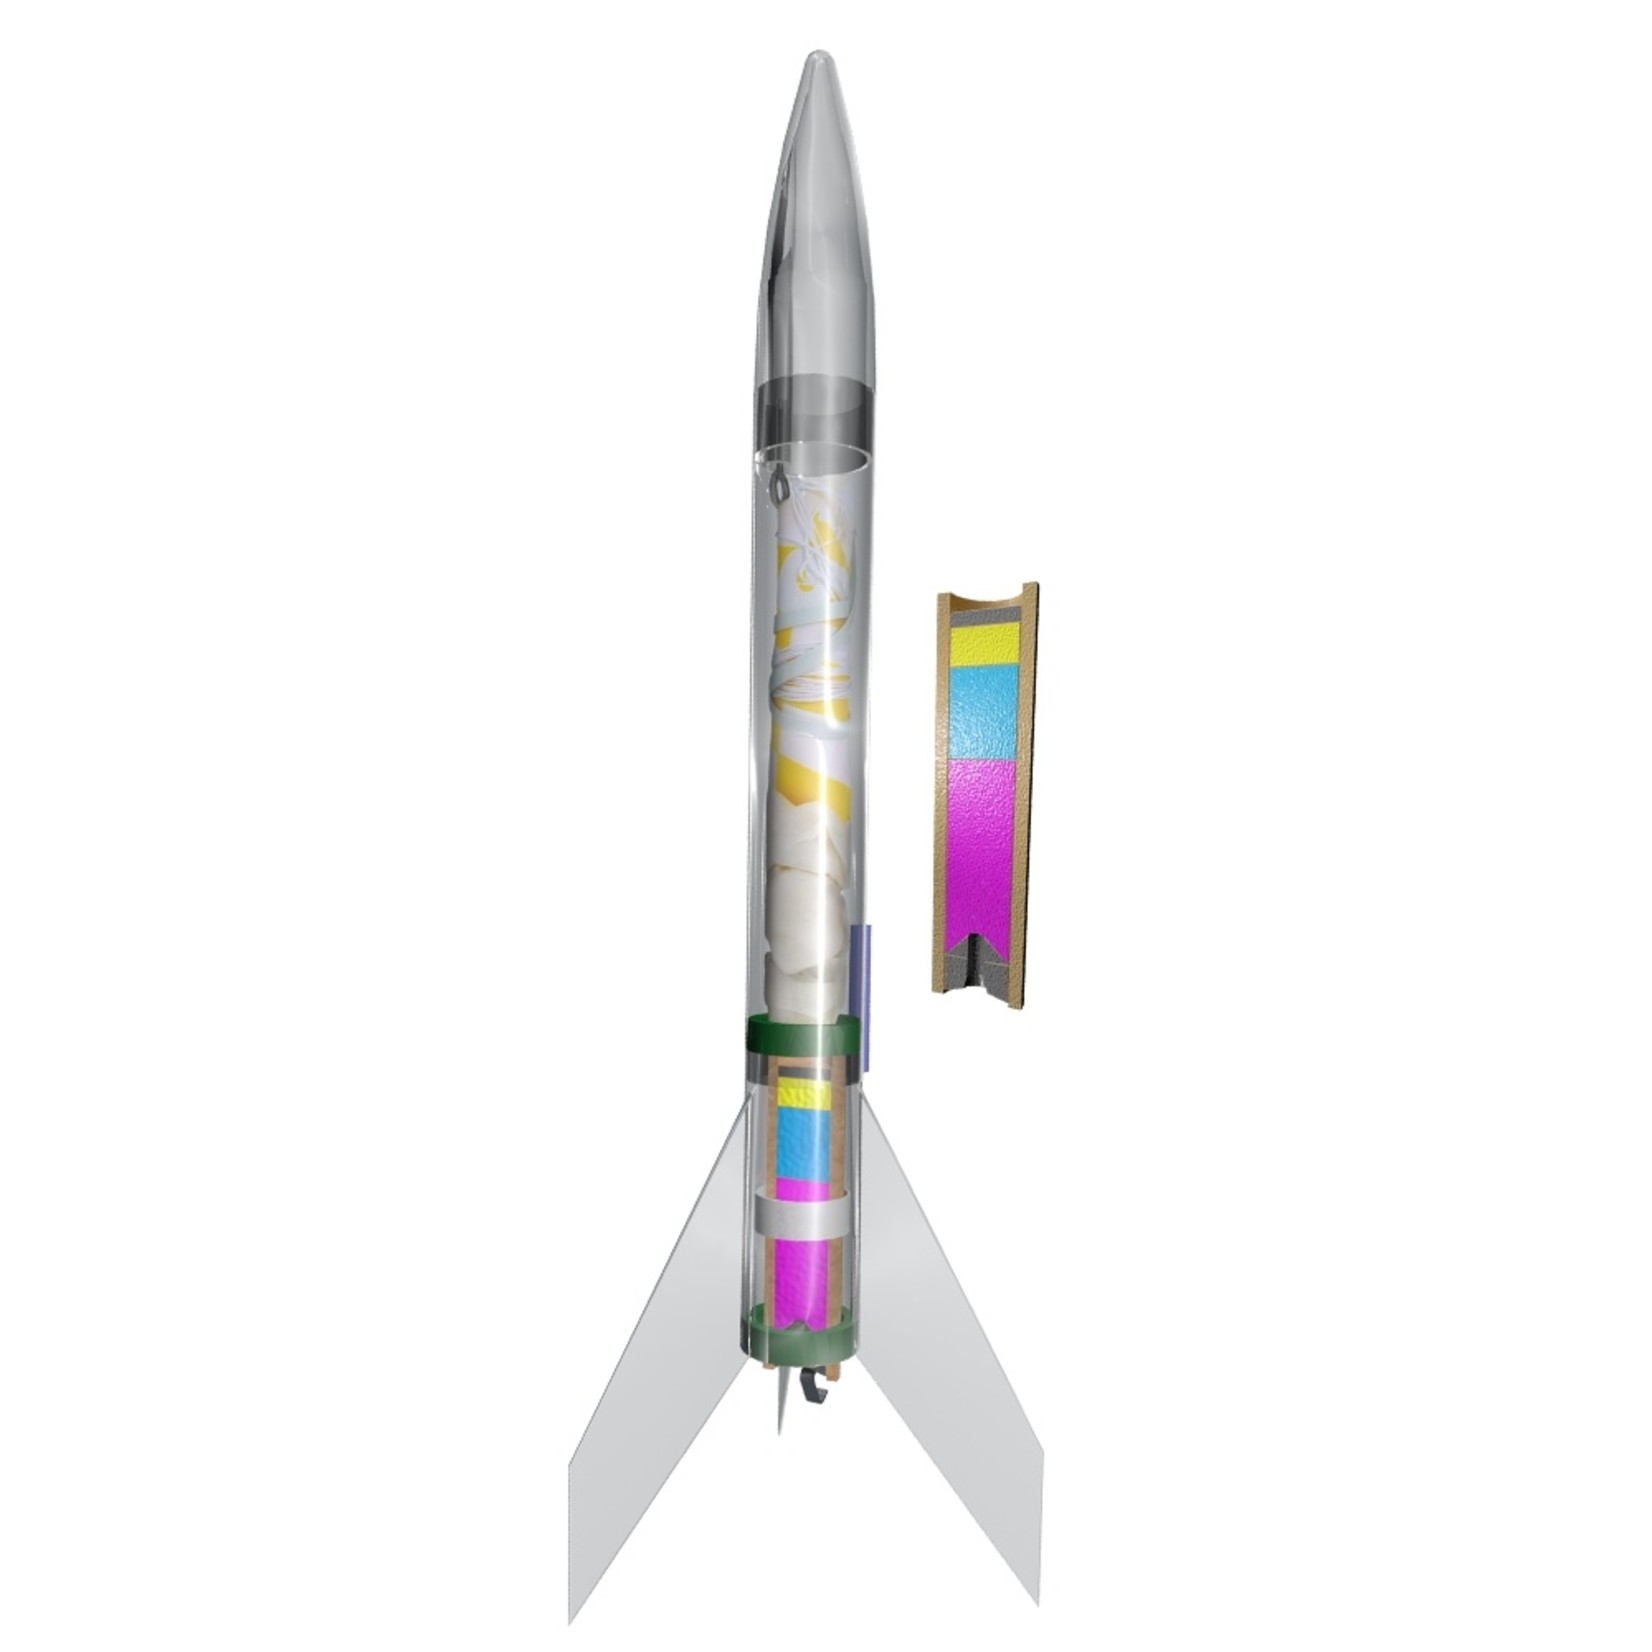 Estes Rockets EST1207  Phantom (Not Launchable)